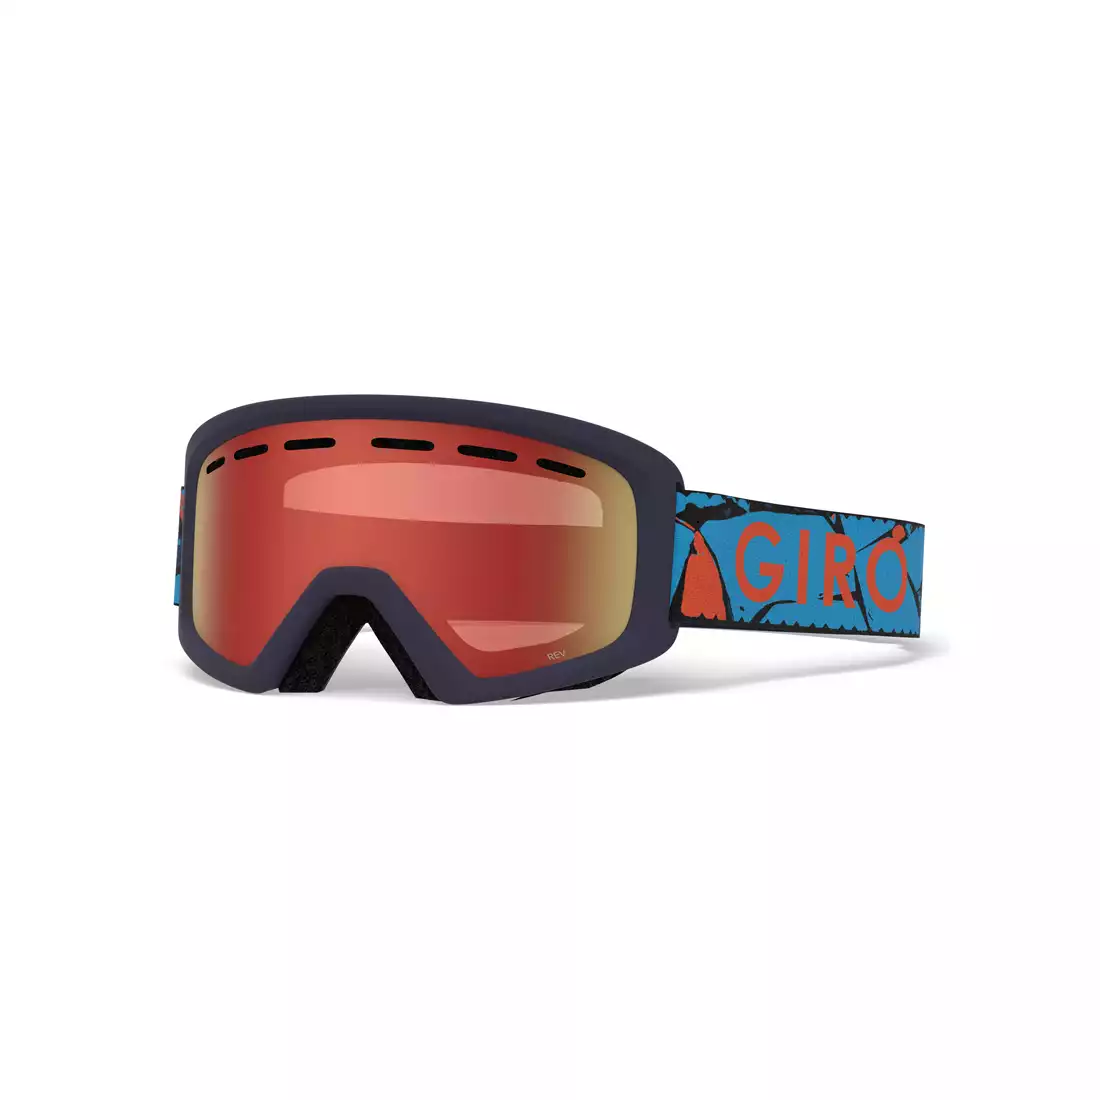 Juniorskie gogle narciarskie / snowboardowe REV BLUE ROCK GR-7094678